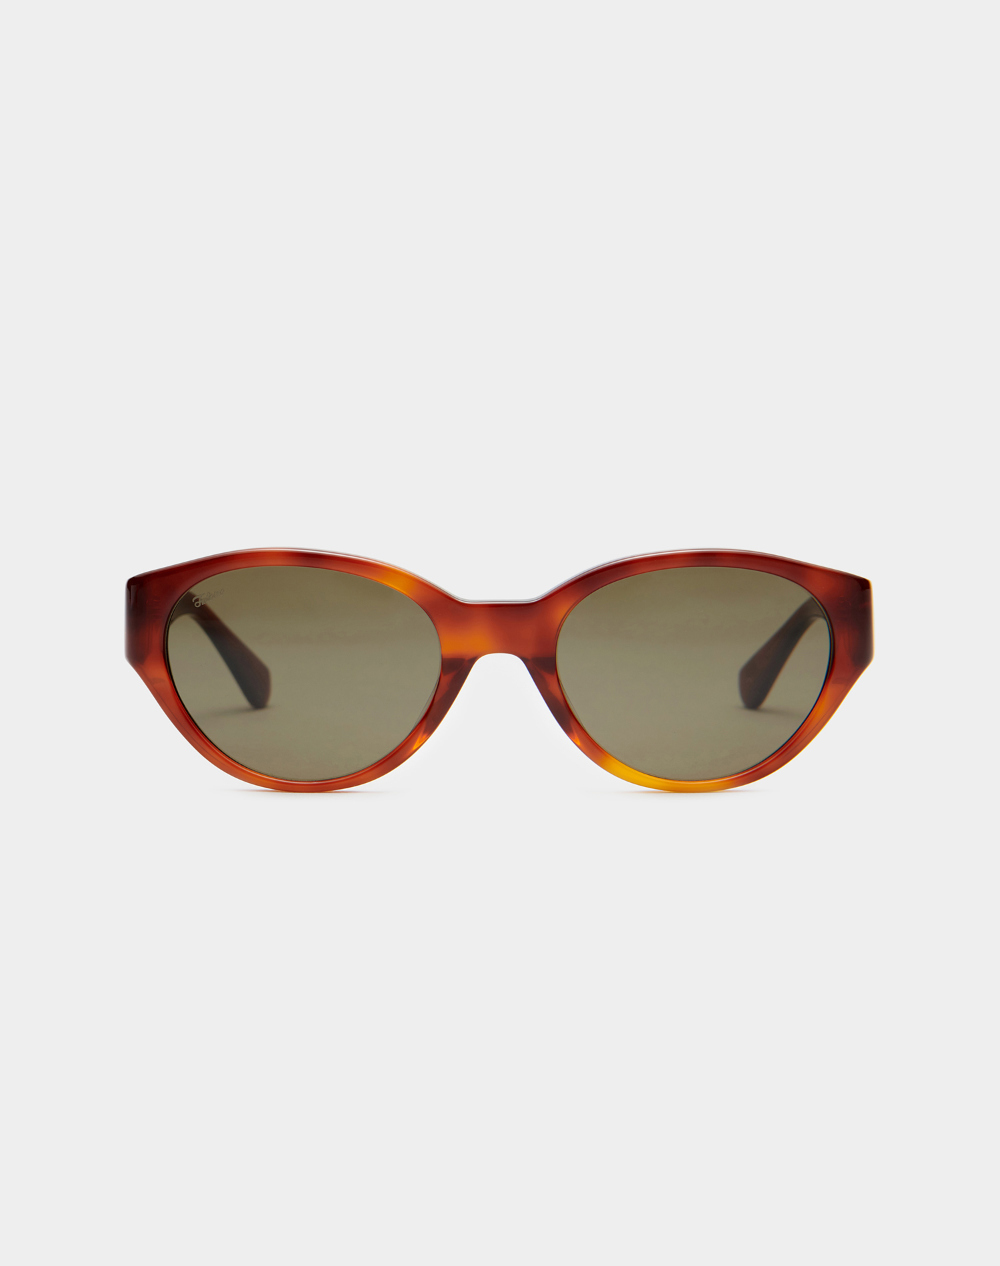 glasses khaki color image-S1L3